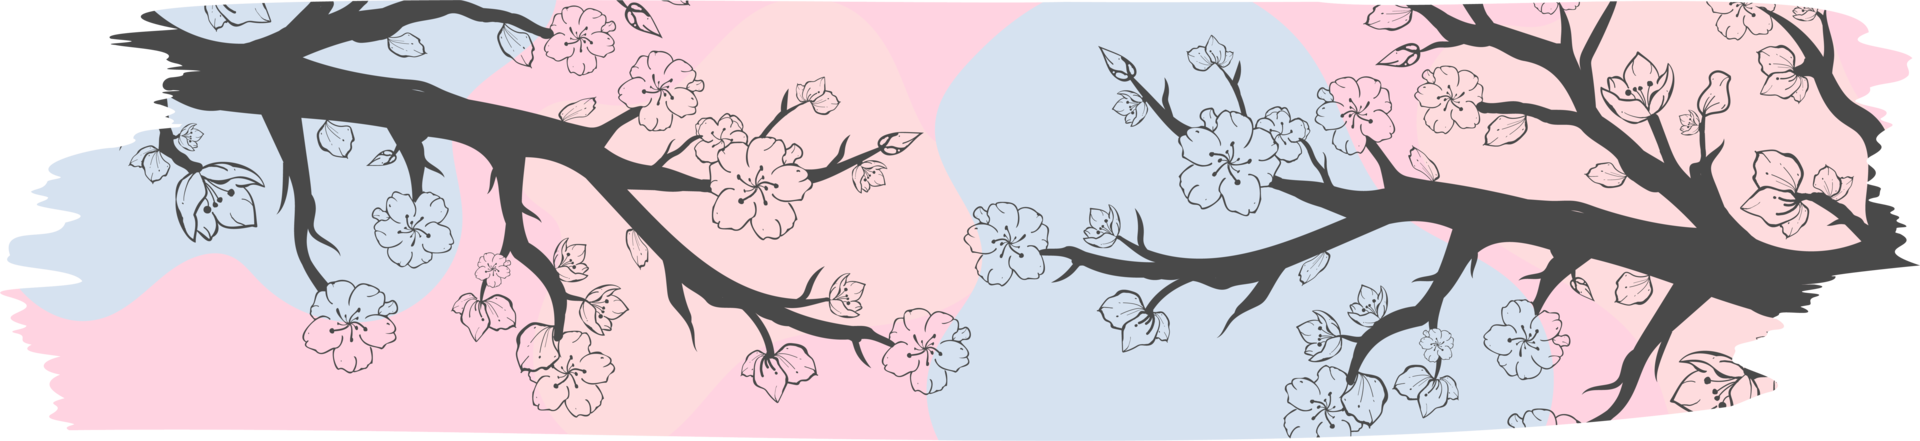 Washi tape with sakura or cherry blossom pattern, Washi tape sakura design illustration png